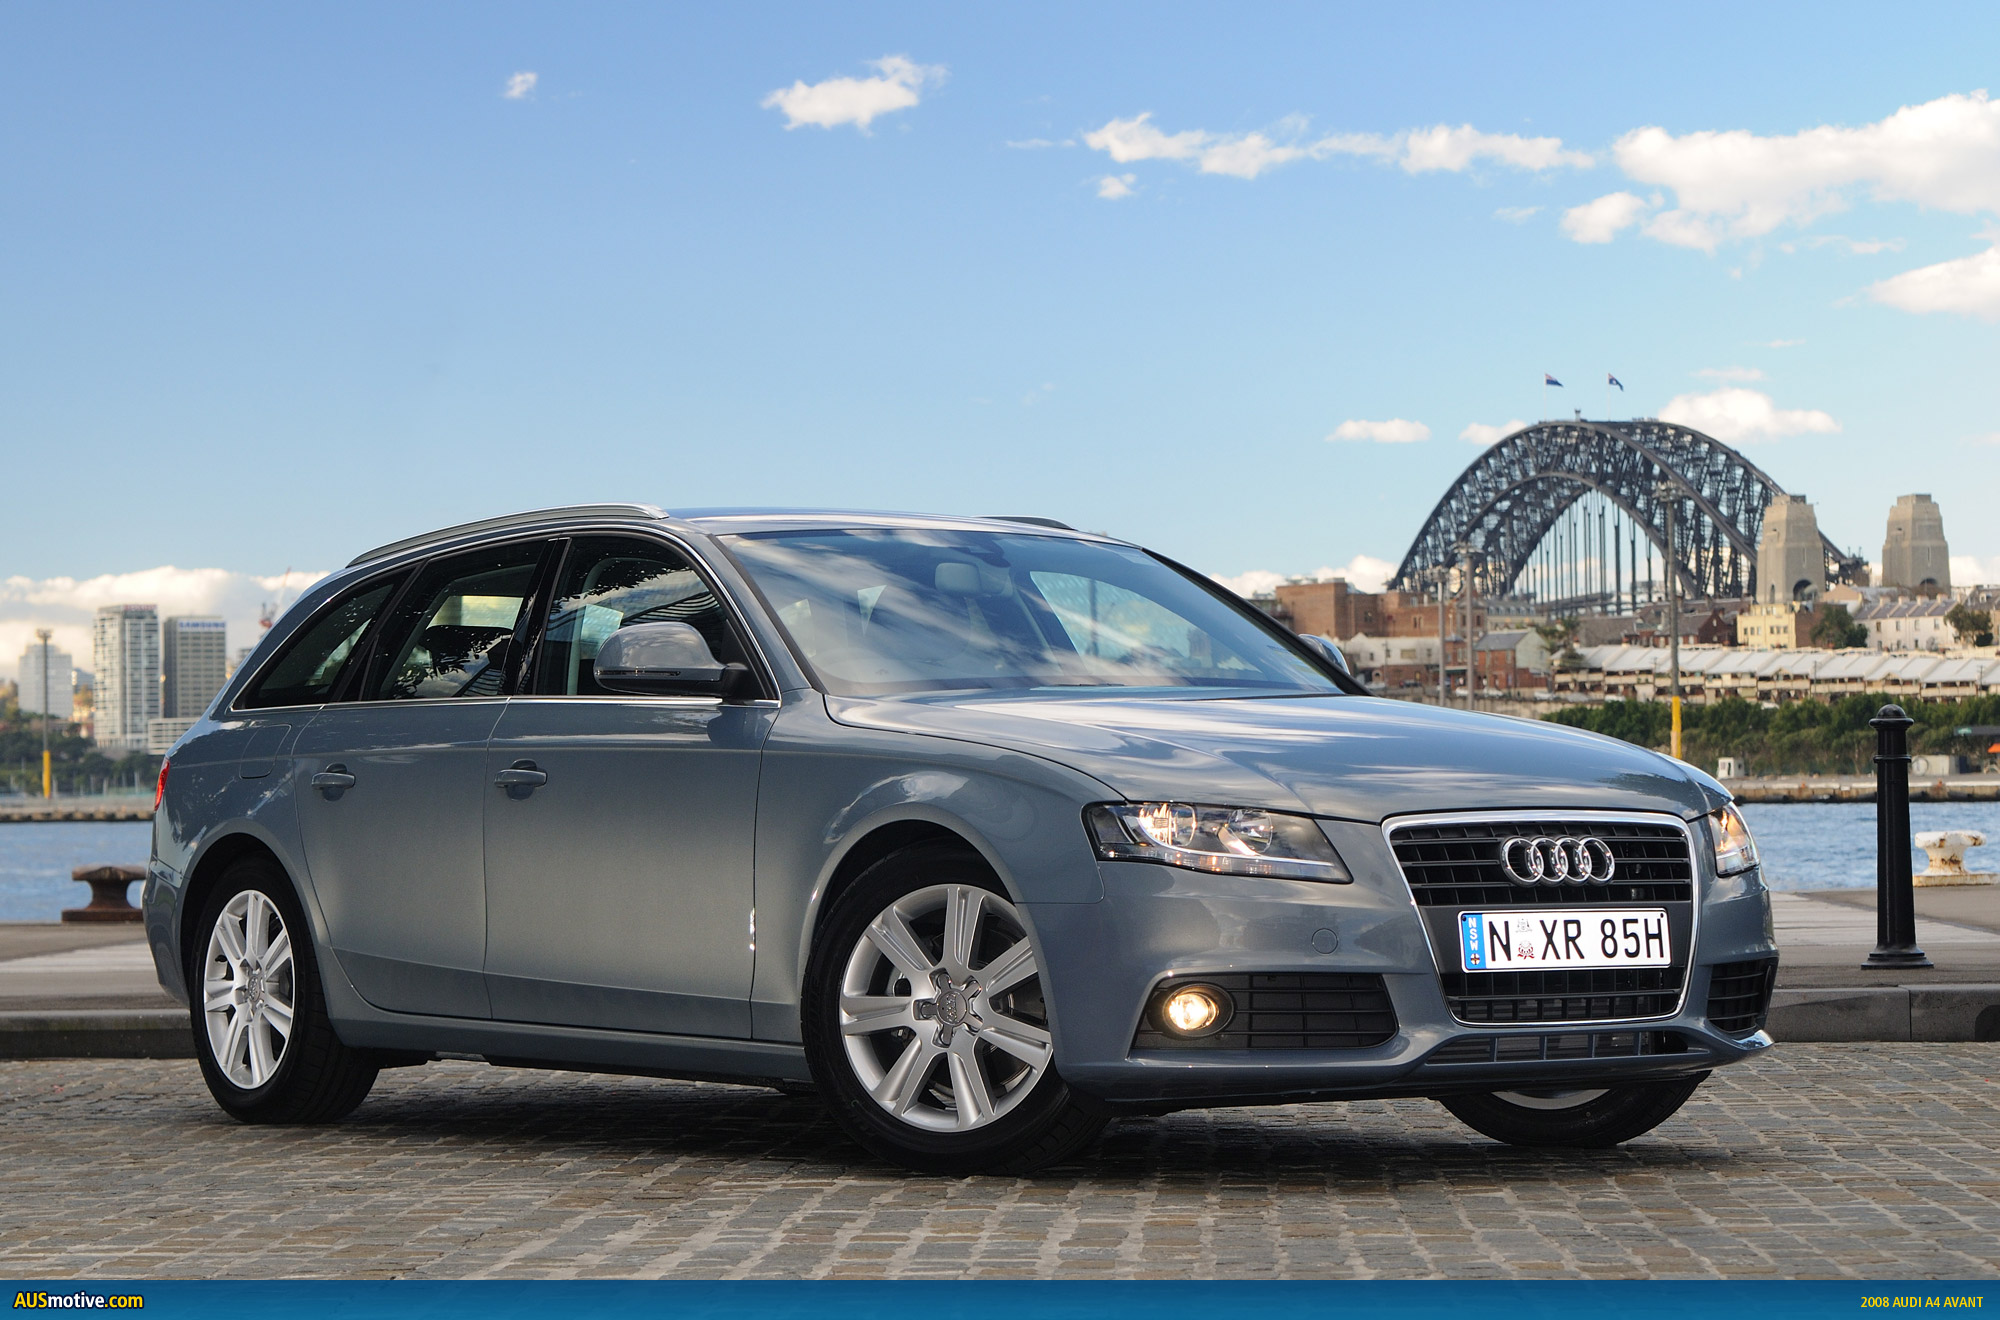 AUSmotive.com » Audi A4 Avant arrives in Australia